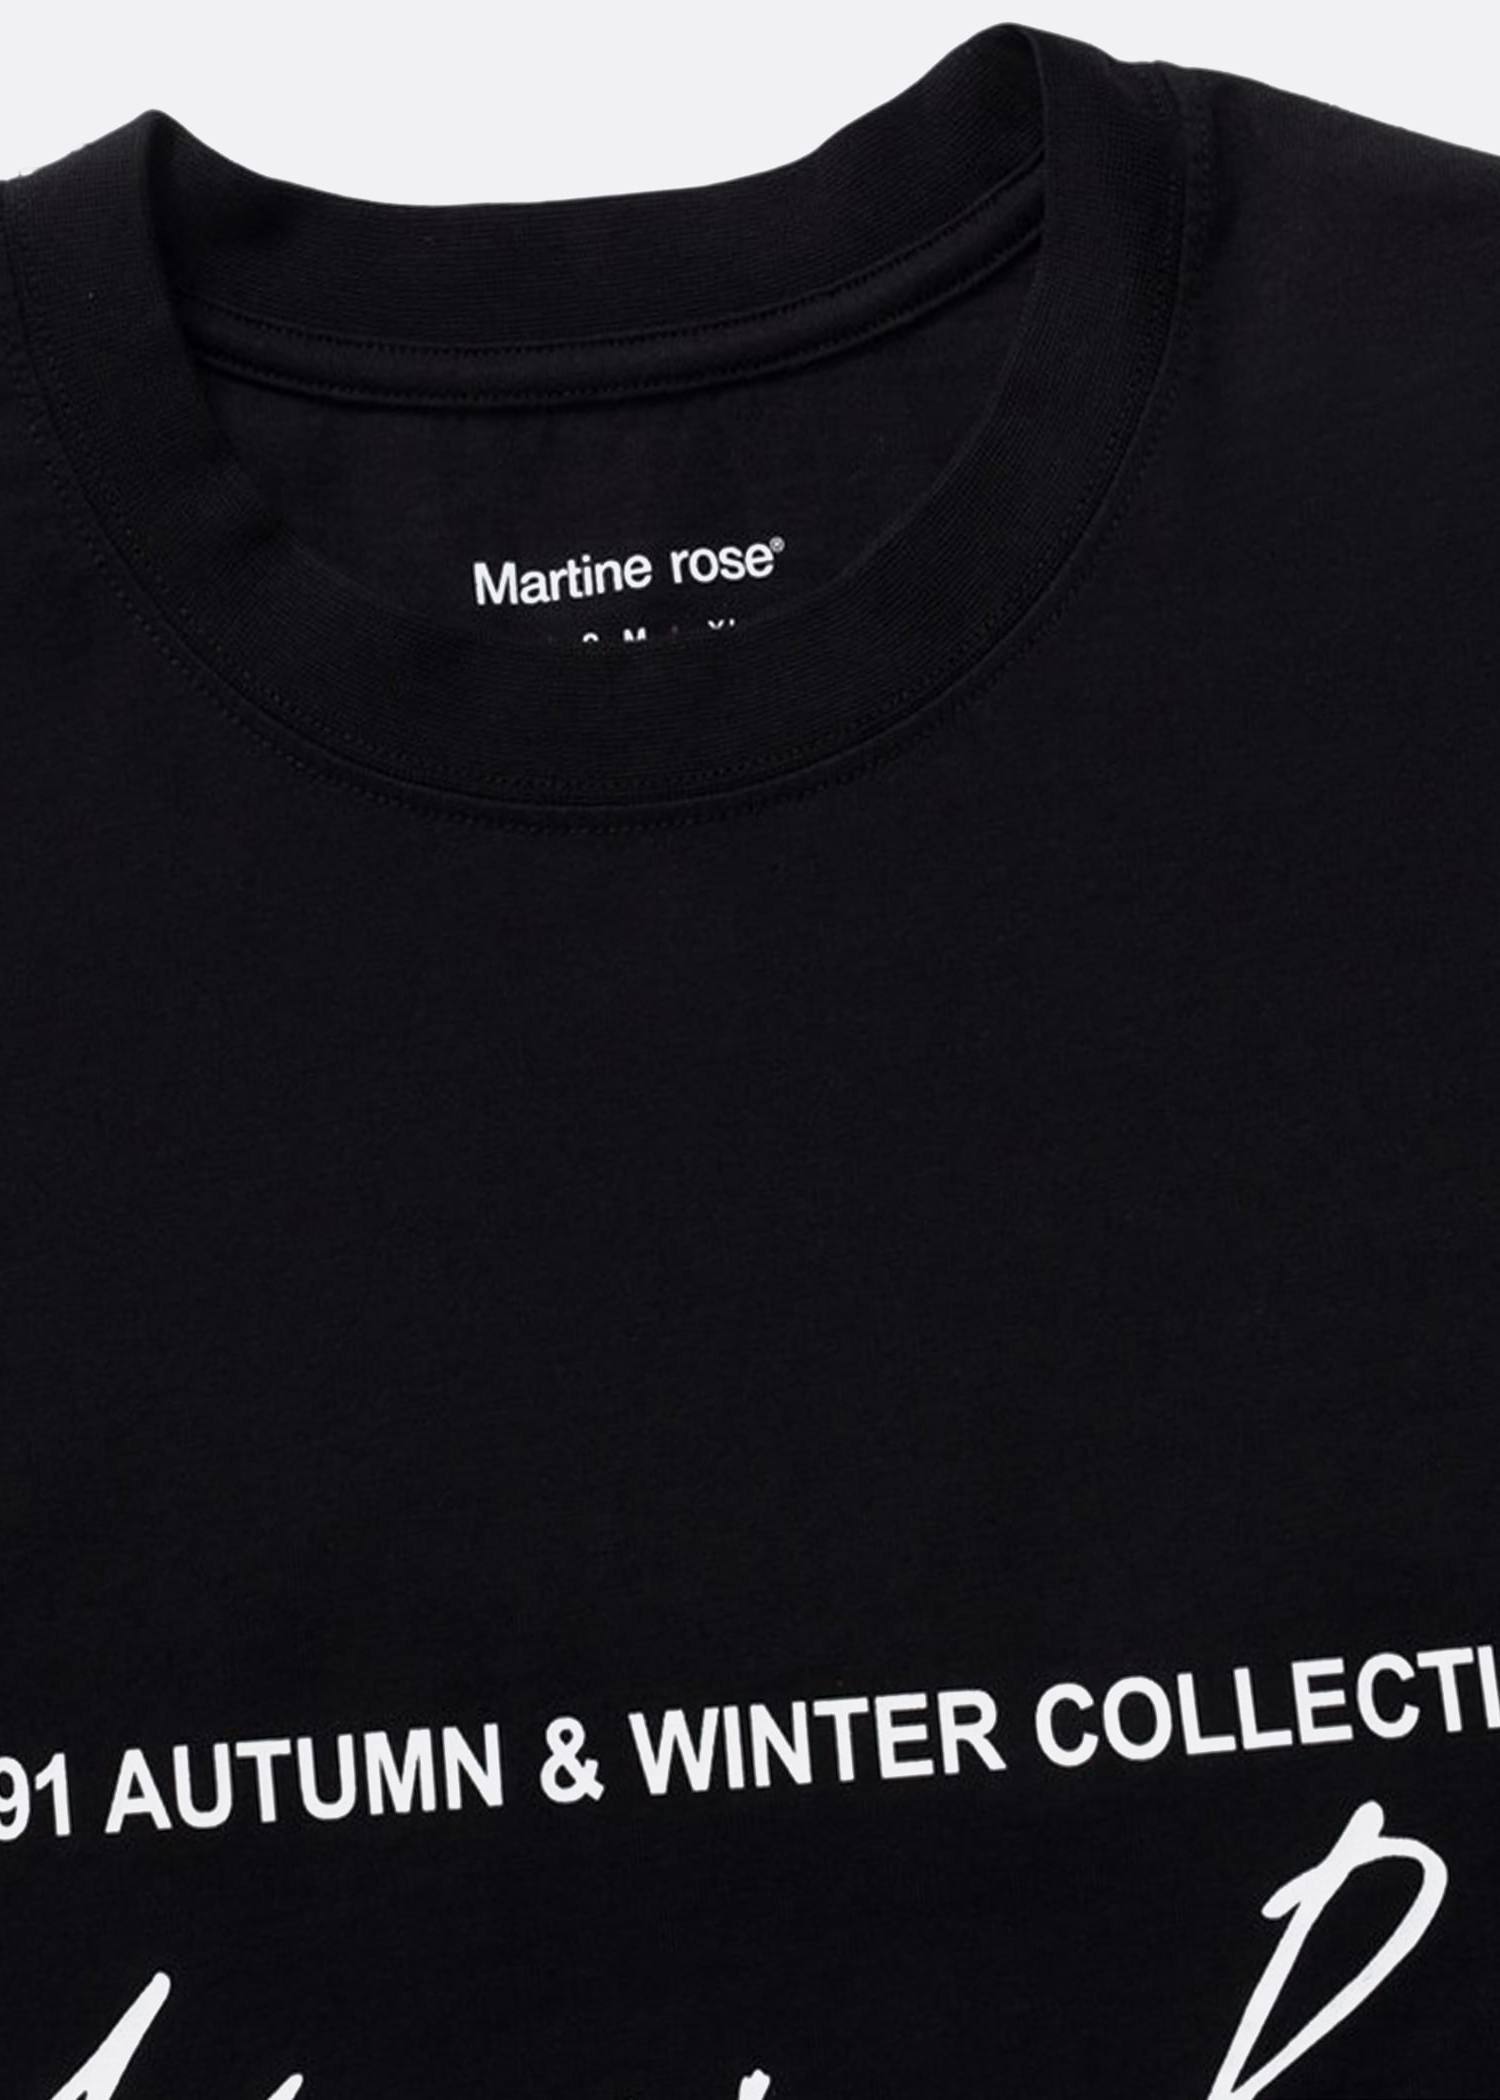 Martine Rose Classic S/S Black T-Shirt